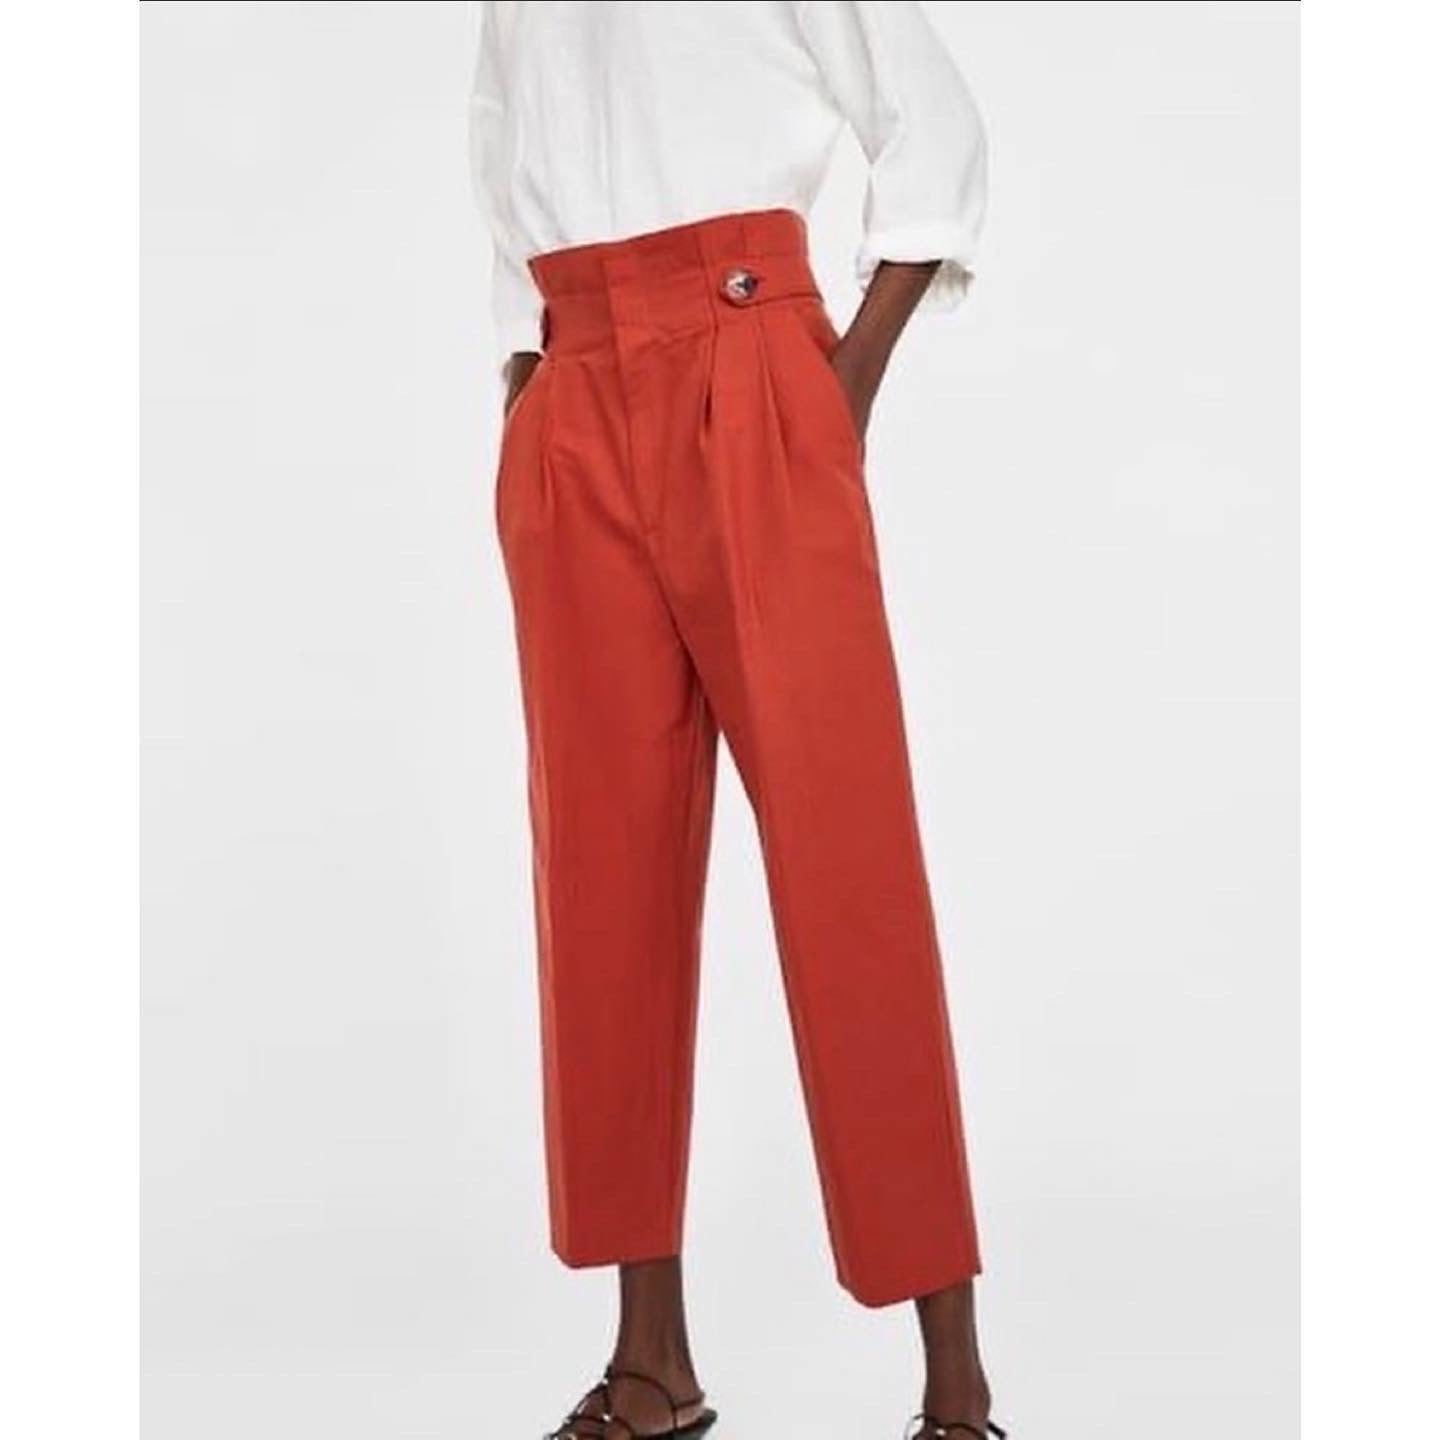 Zara Paperbag Trousers